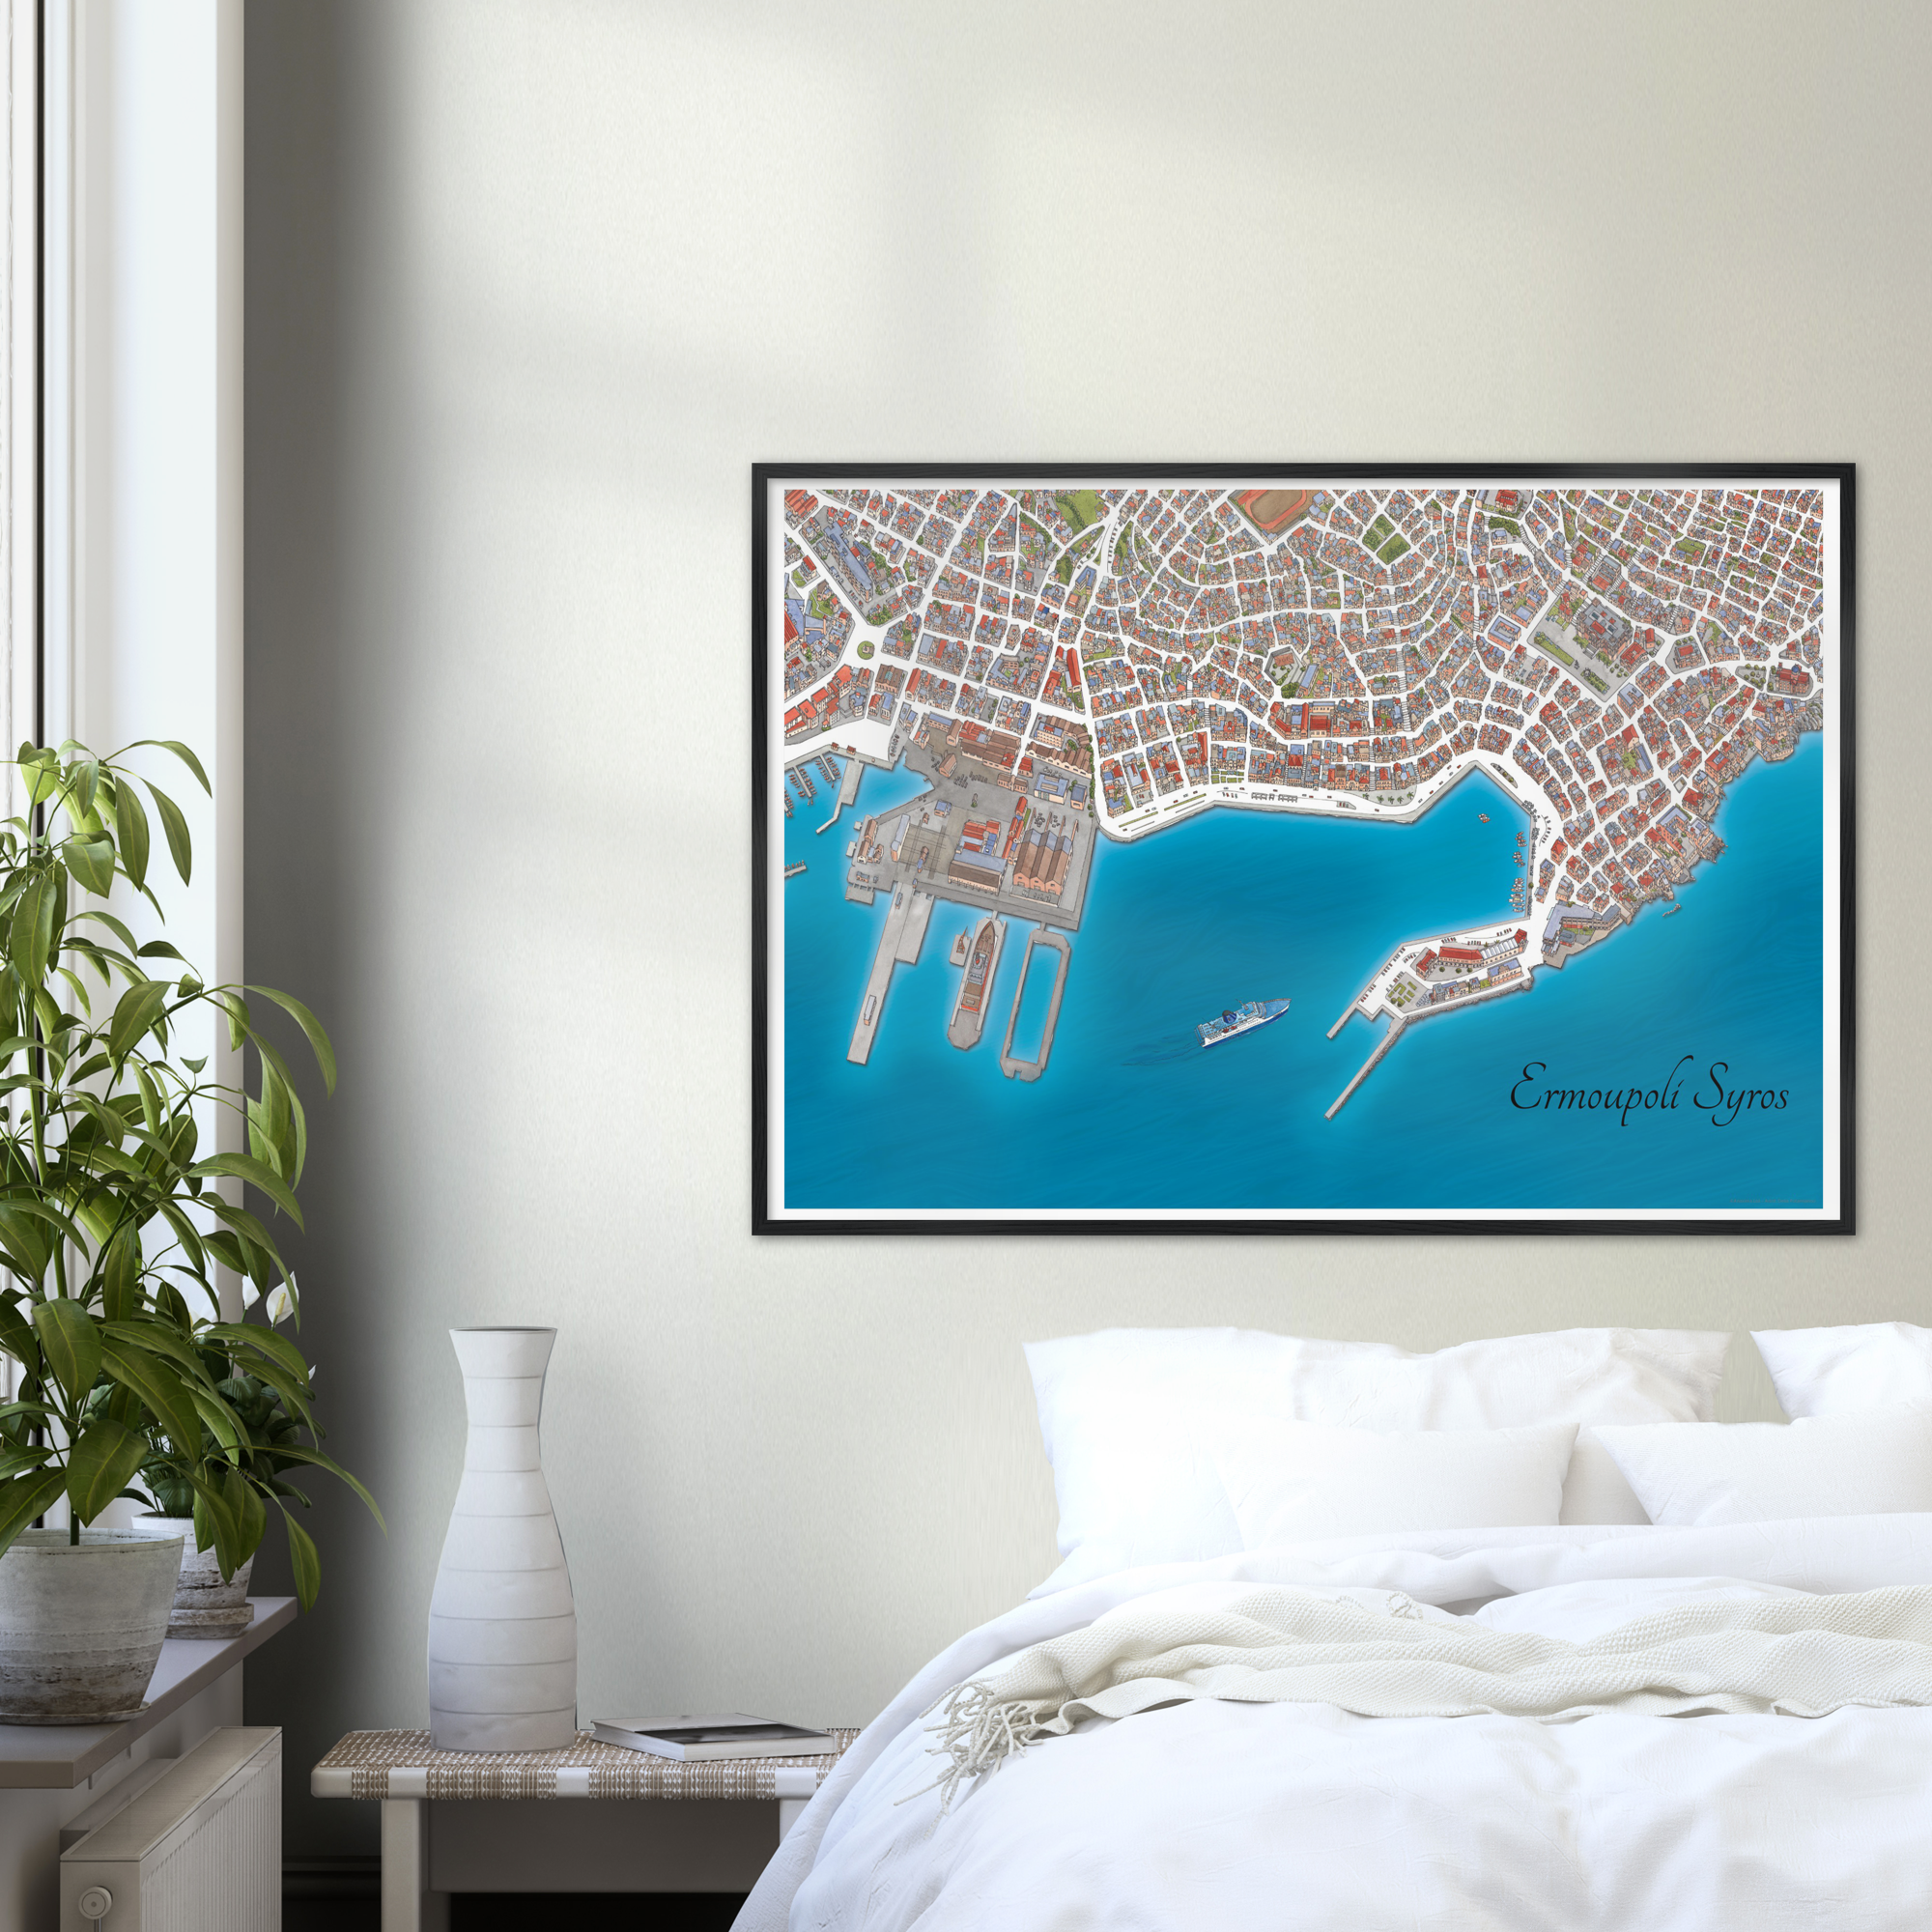 Ermoupoli, Syros, Greece – Color Print – Wooden Framed Poster